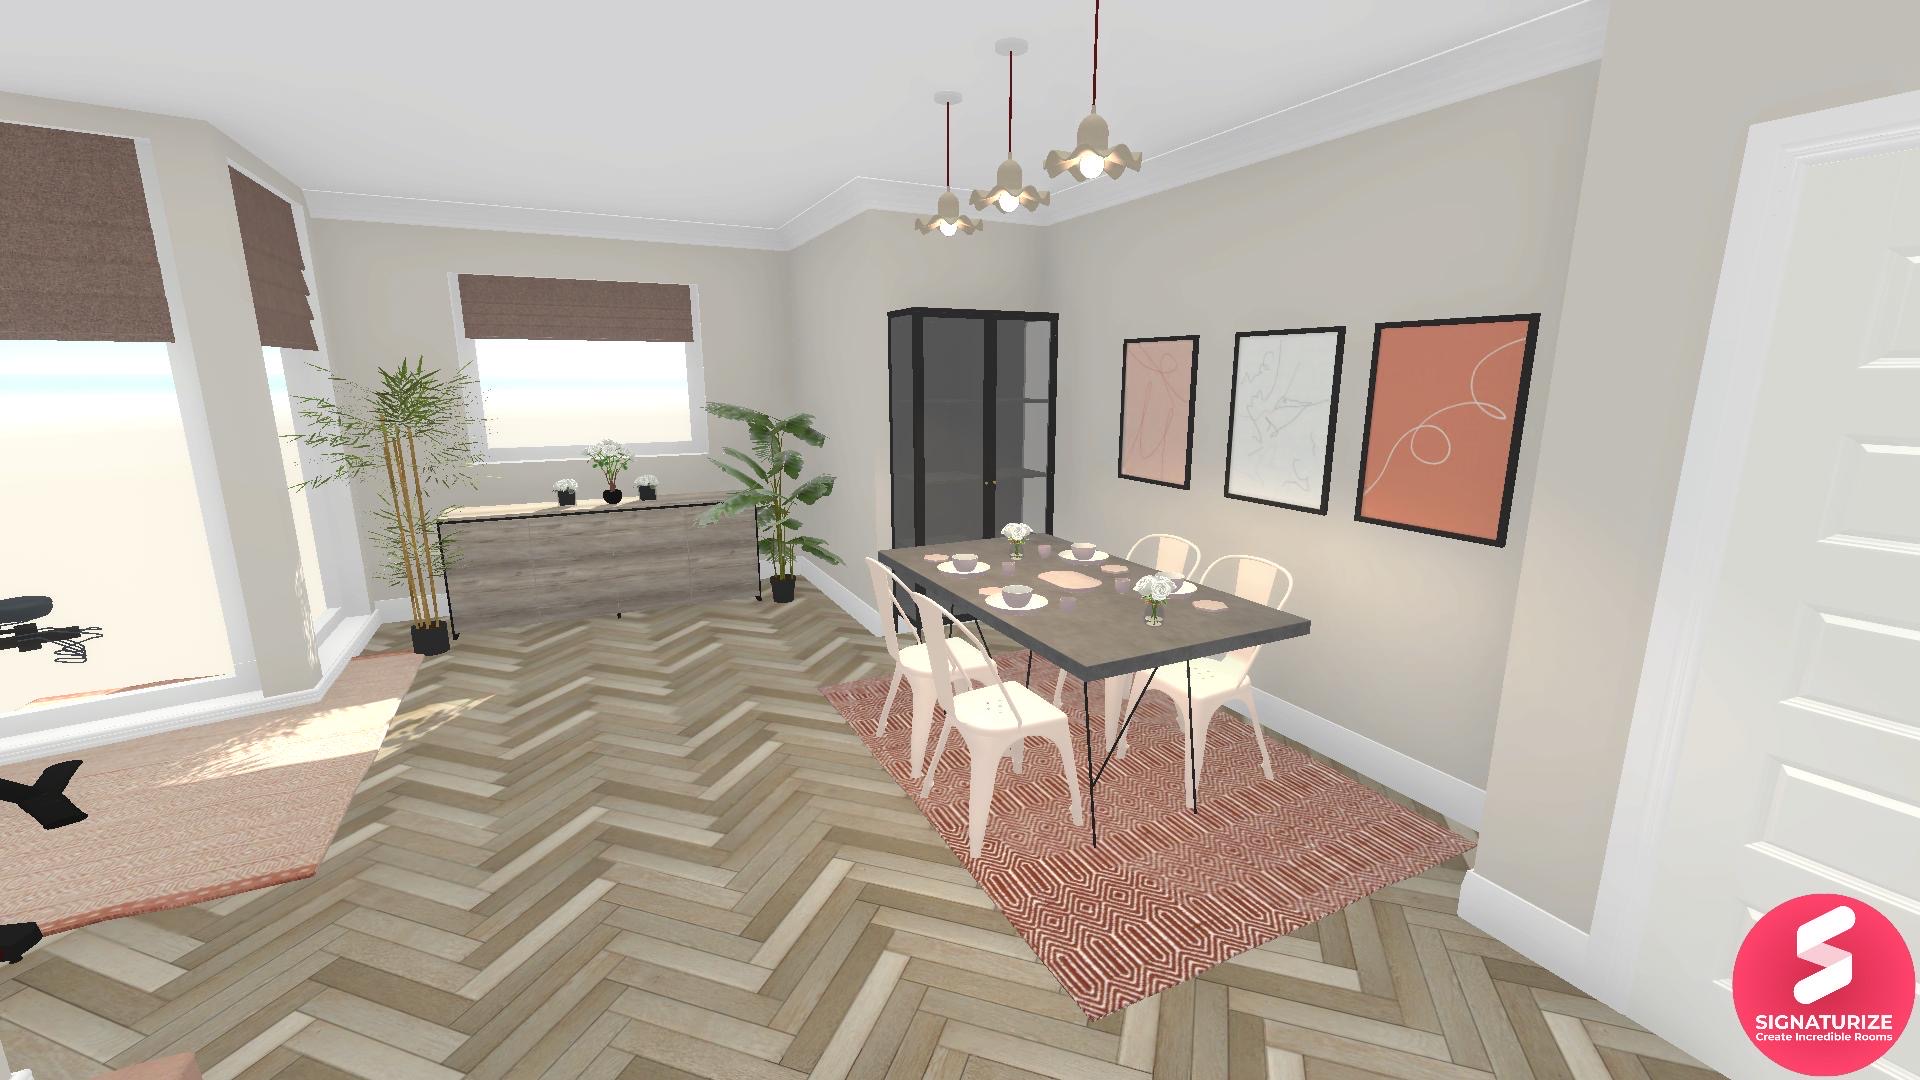 Dining Room Idea with Pink rug & Herringbone Flooring